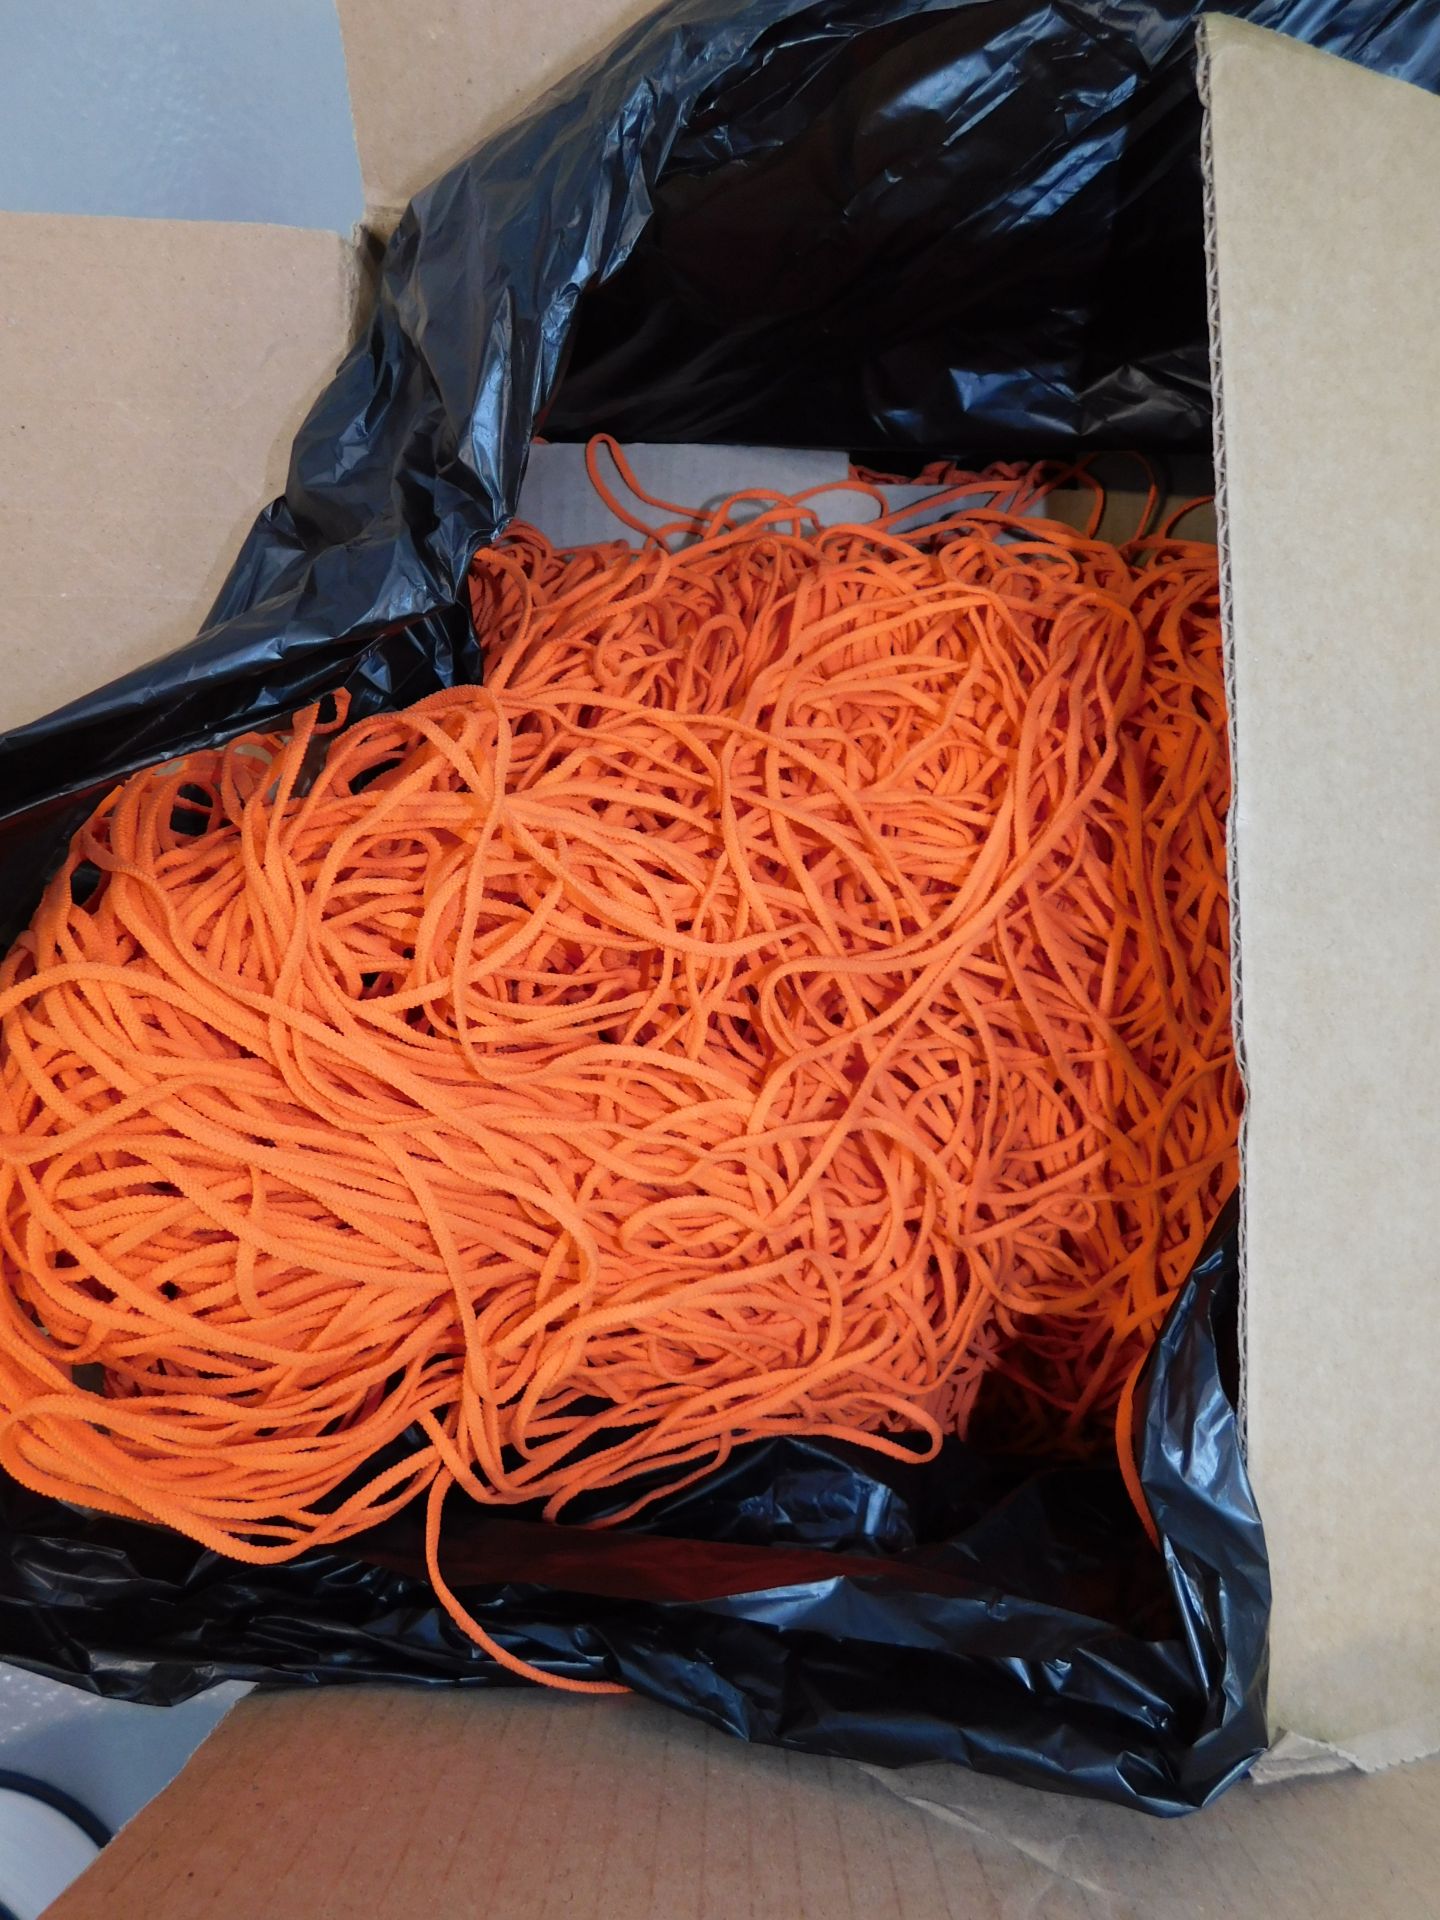 14 Opened Boxes Elasticated 3mm Ear loop Material, Orange - Image 2 of 2